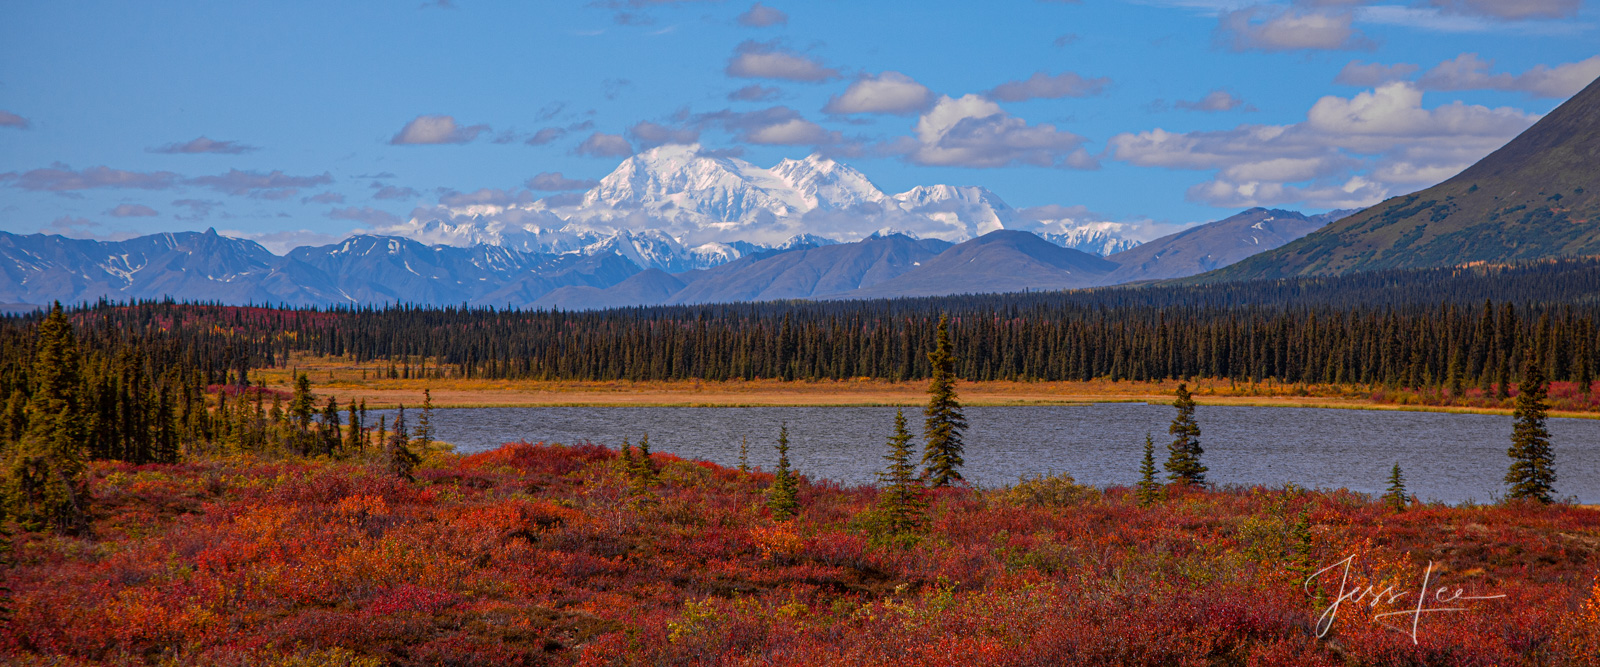 Fall color in Alaska